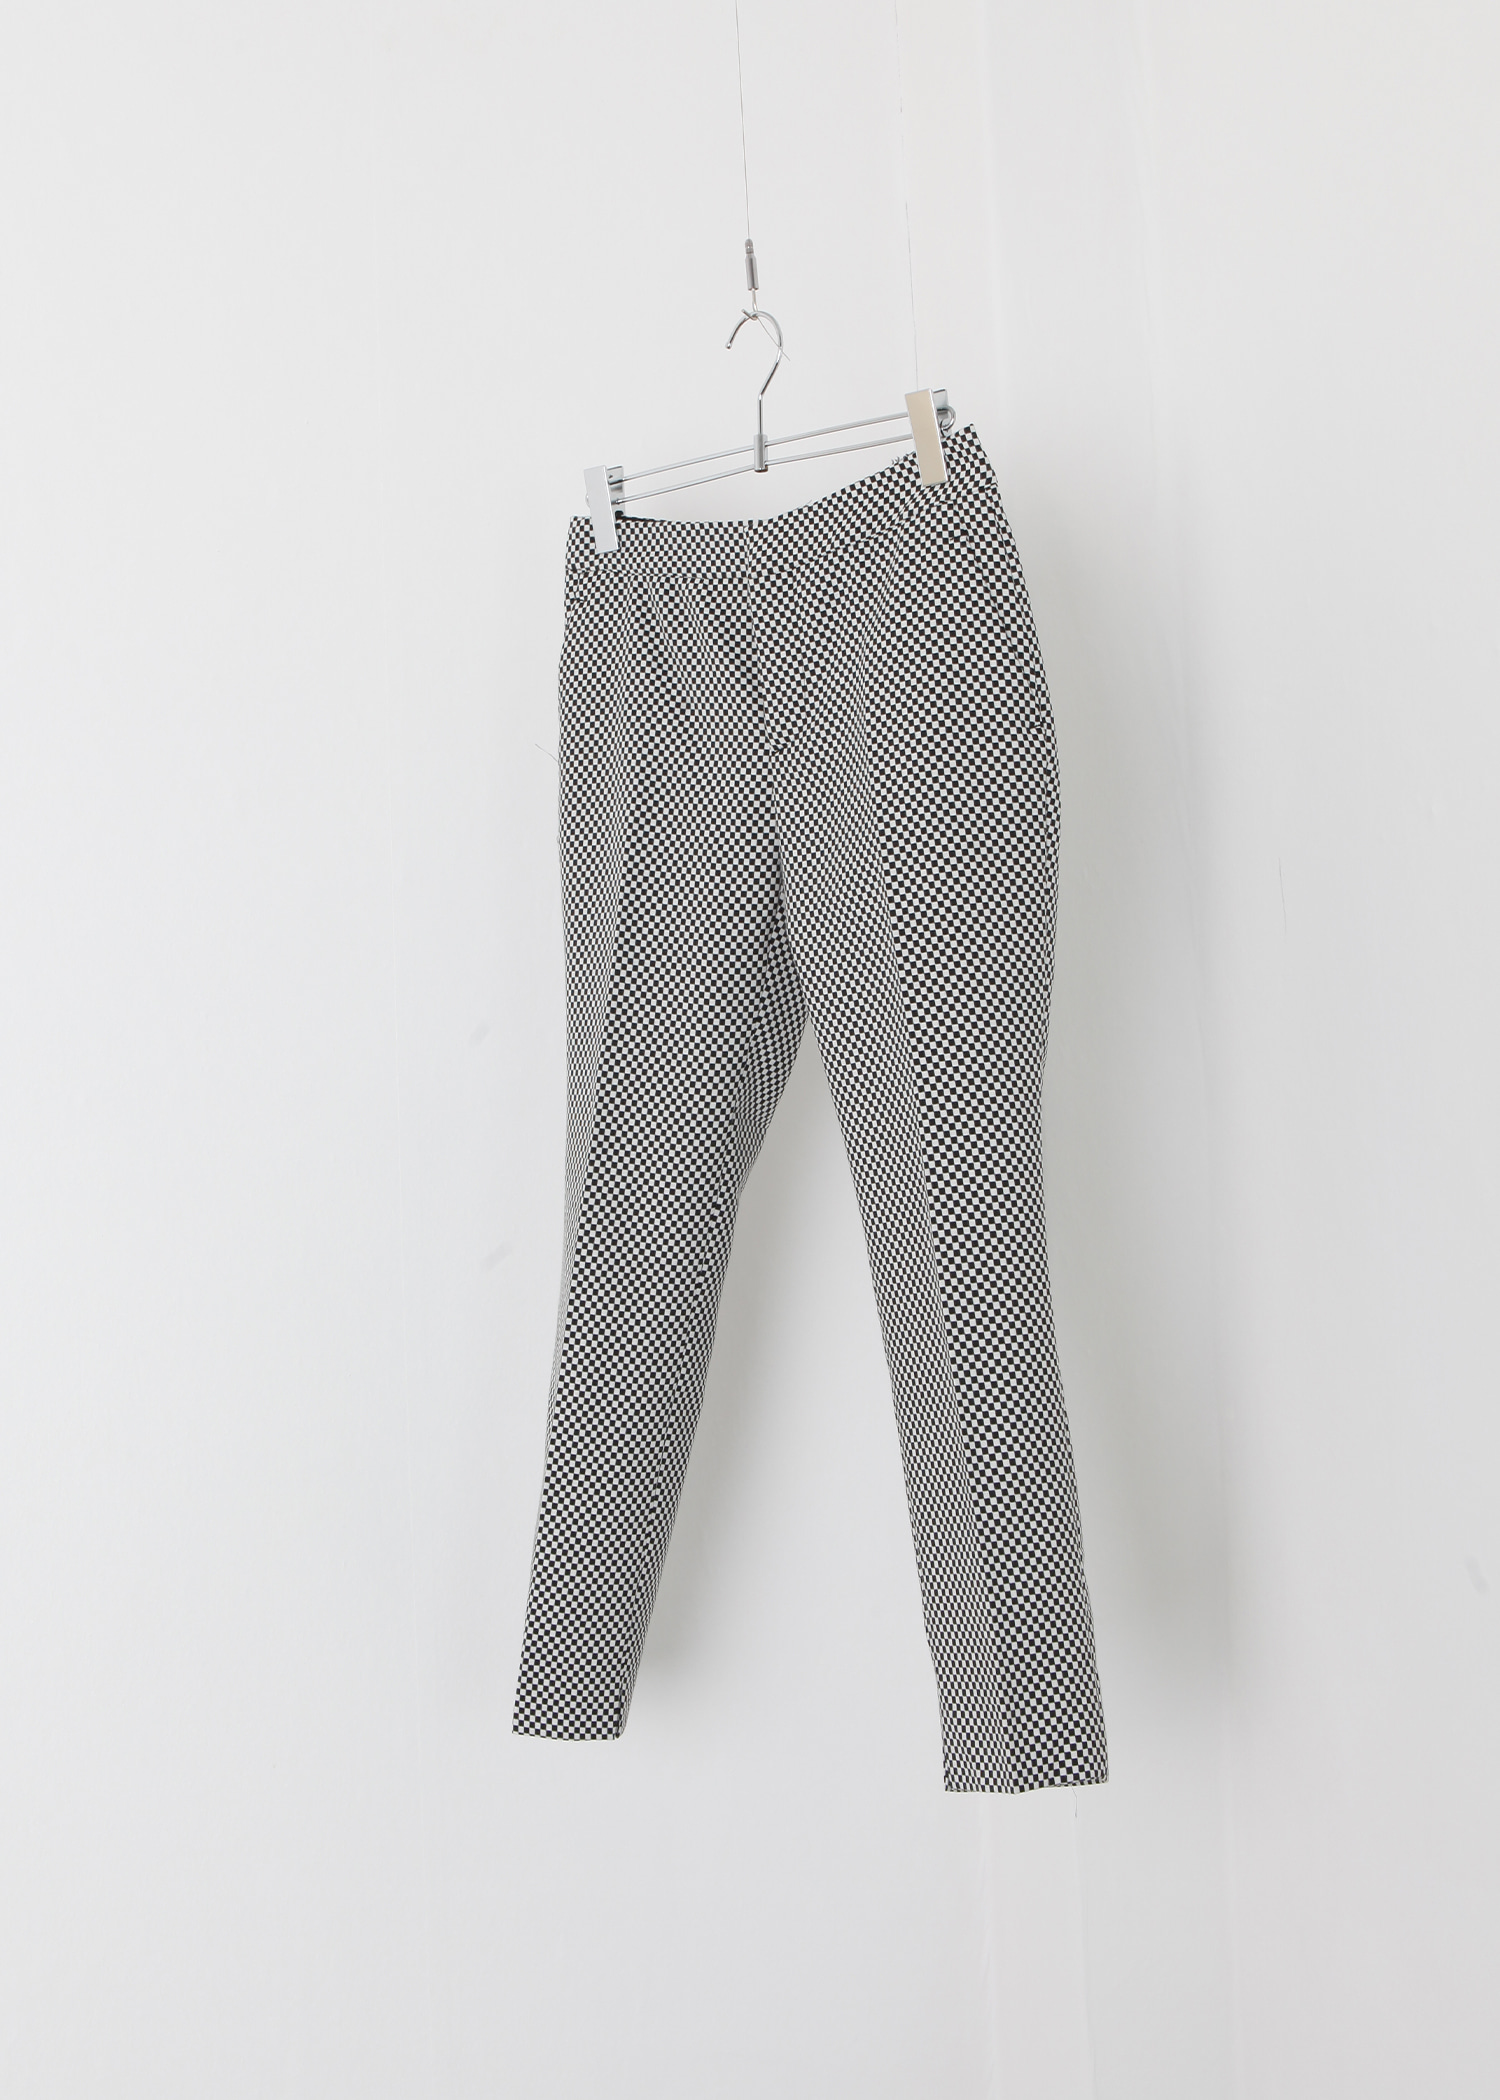 select vintage : checkerboard pants